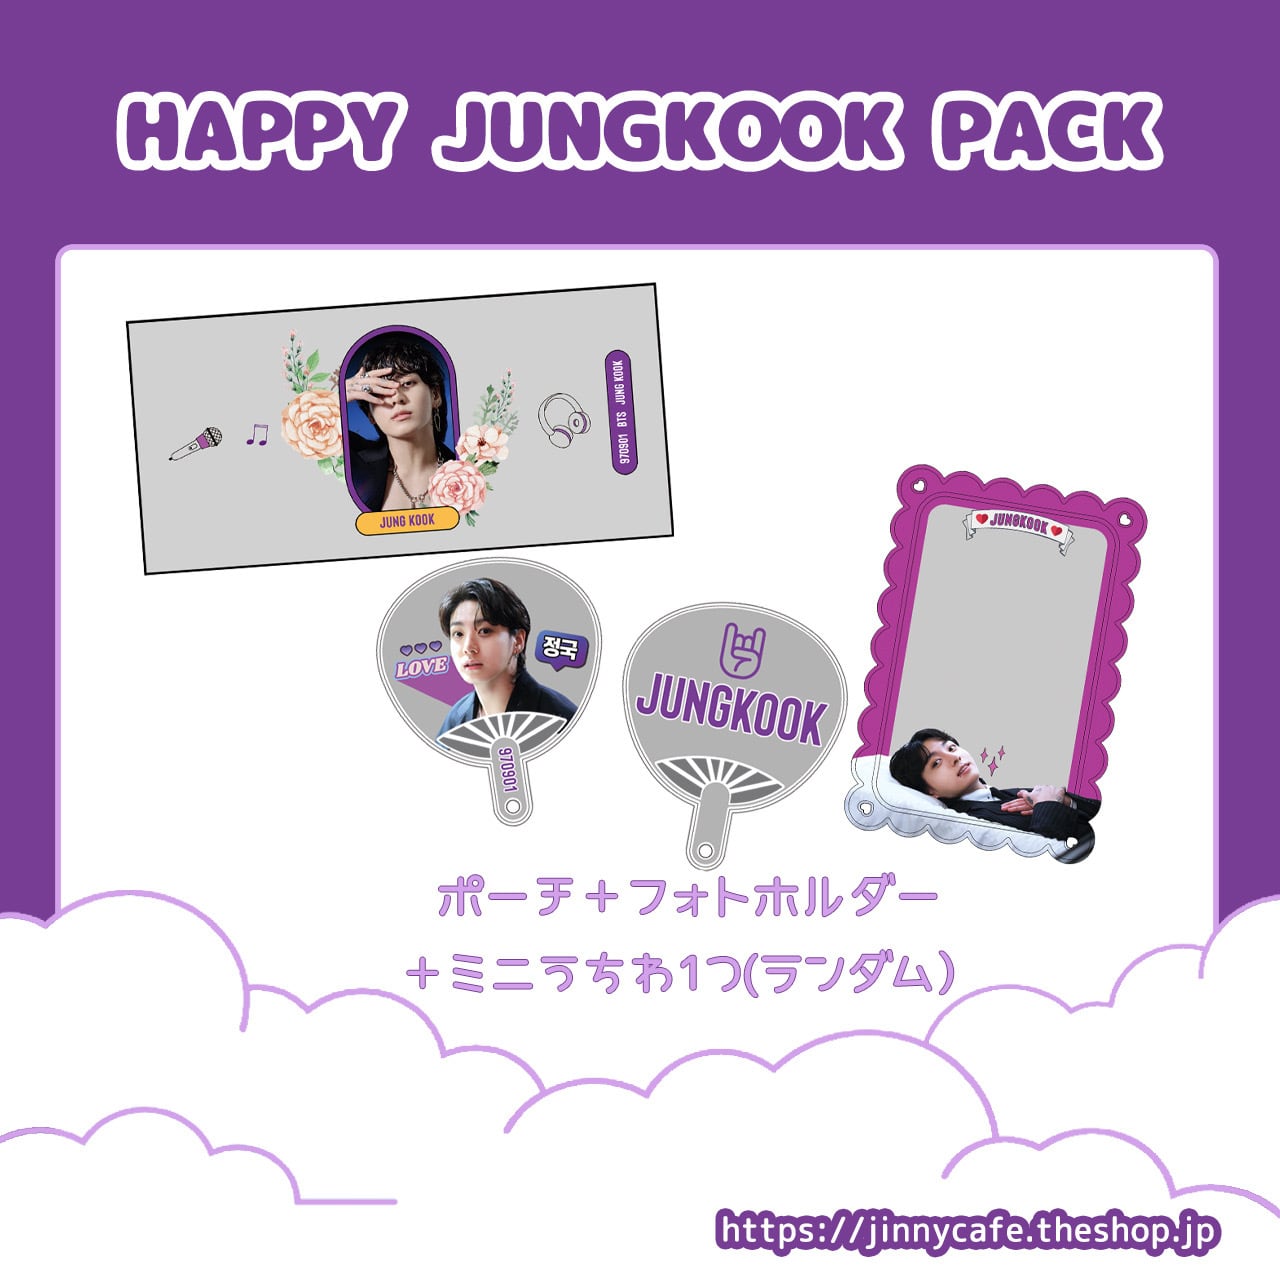 [HAPPY BIRTHDAY]HAPPY JUNG KOOK PACK【BTS】